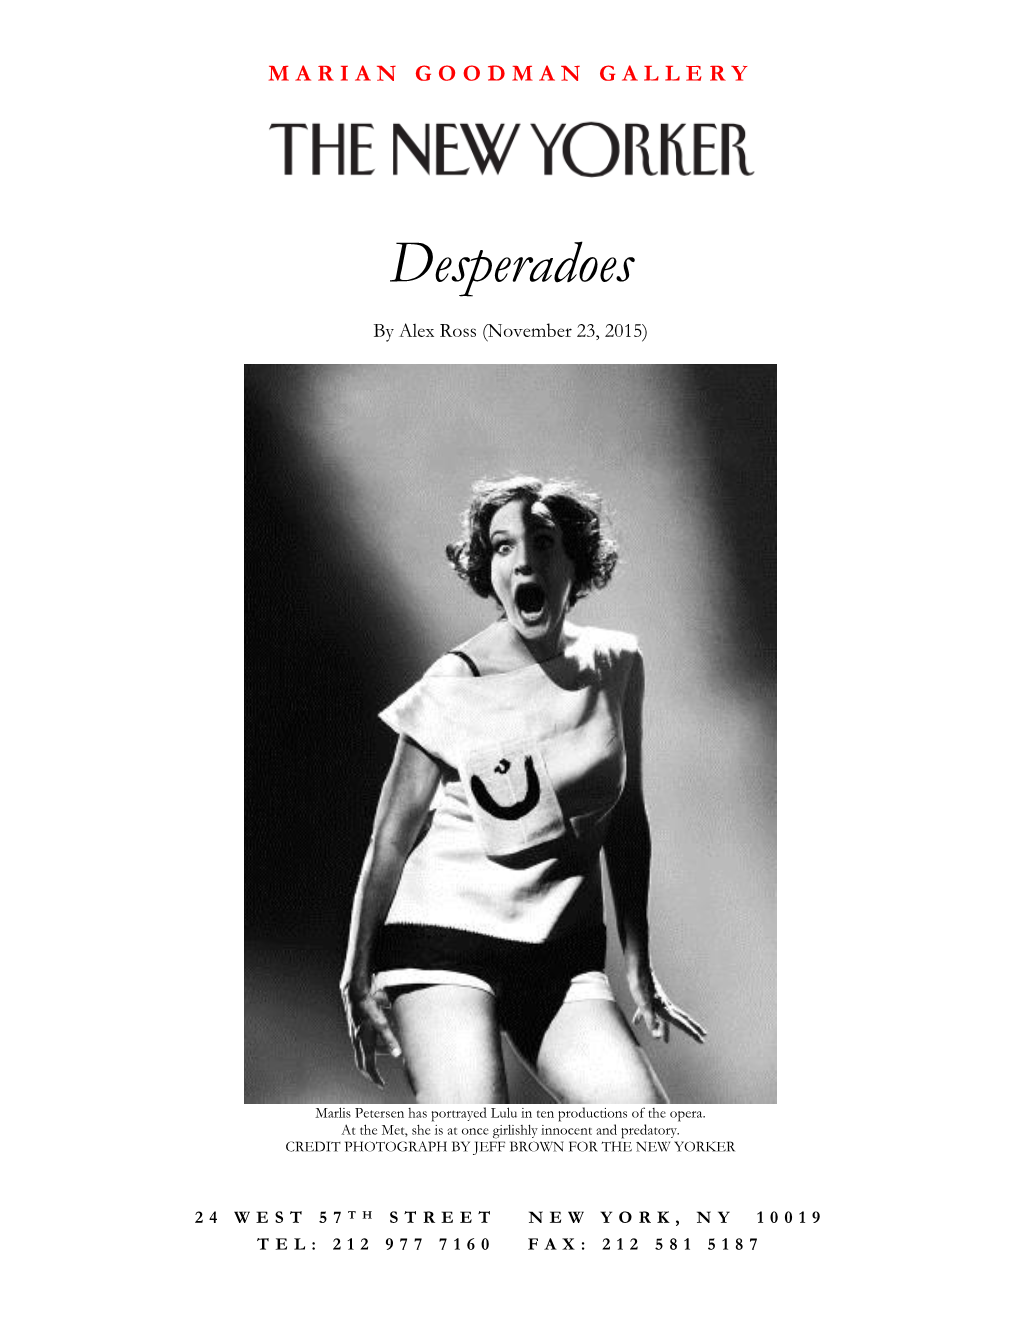 Press Desperadoes the New Yorker, November 23, 2015